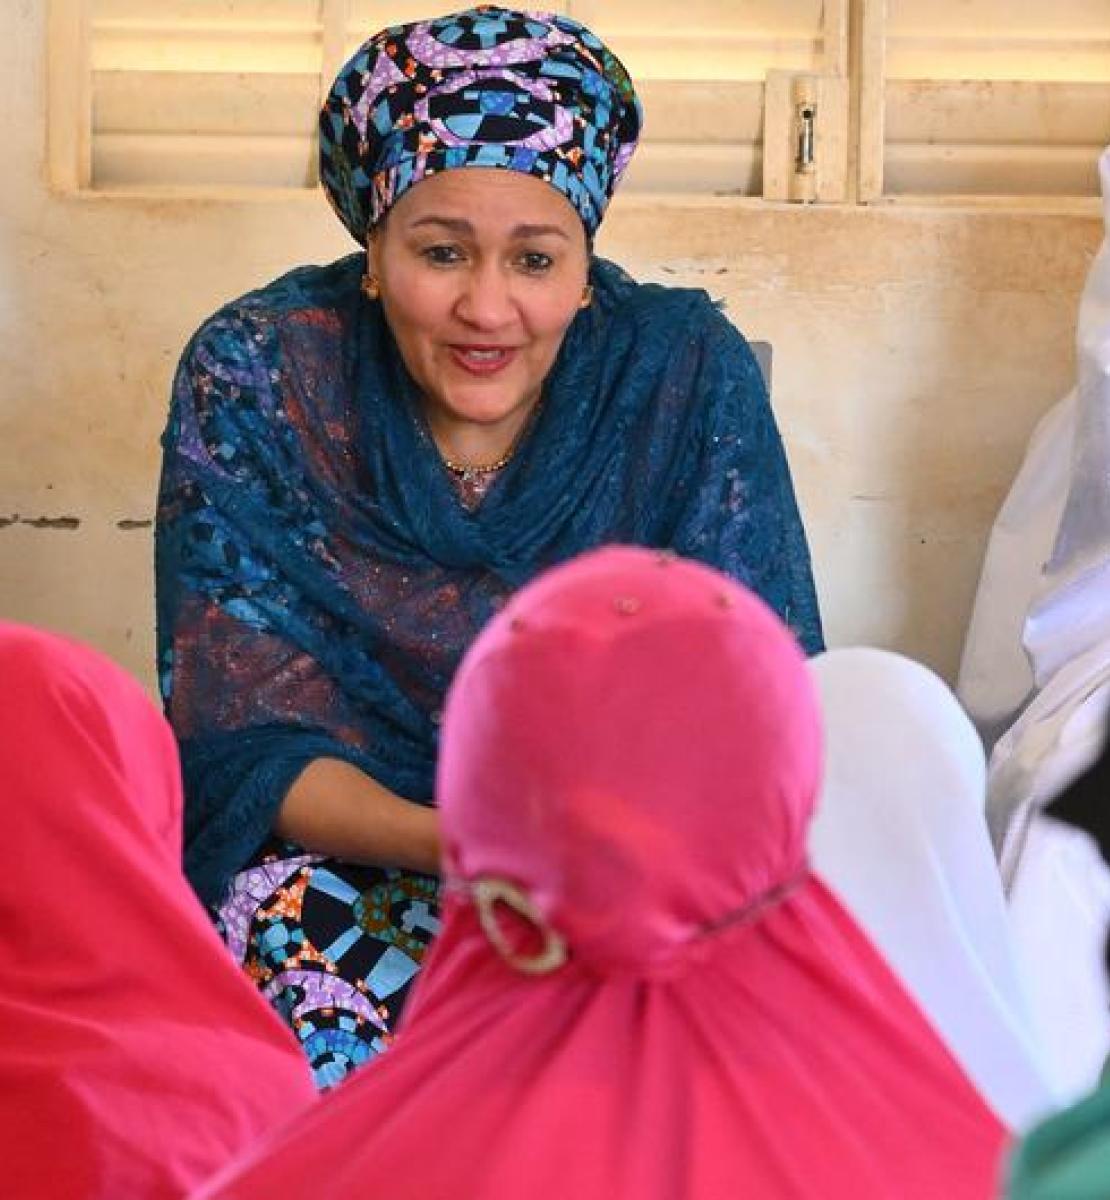 UN Deputy Secretary-General Amina Mohammed with school children in Niamey